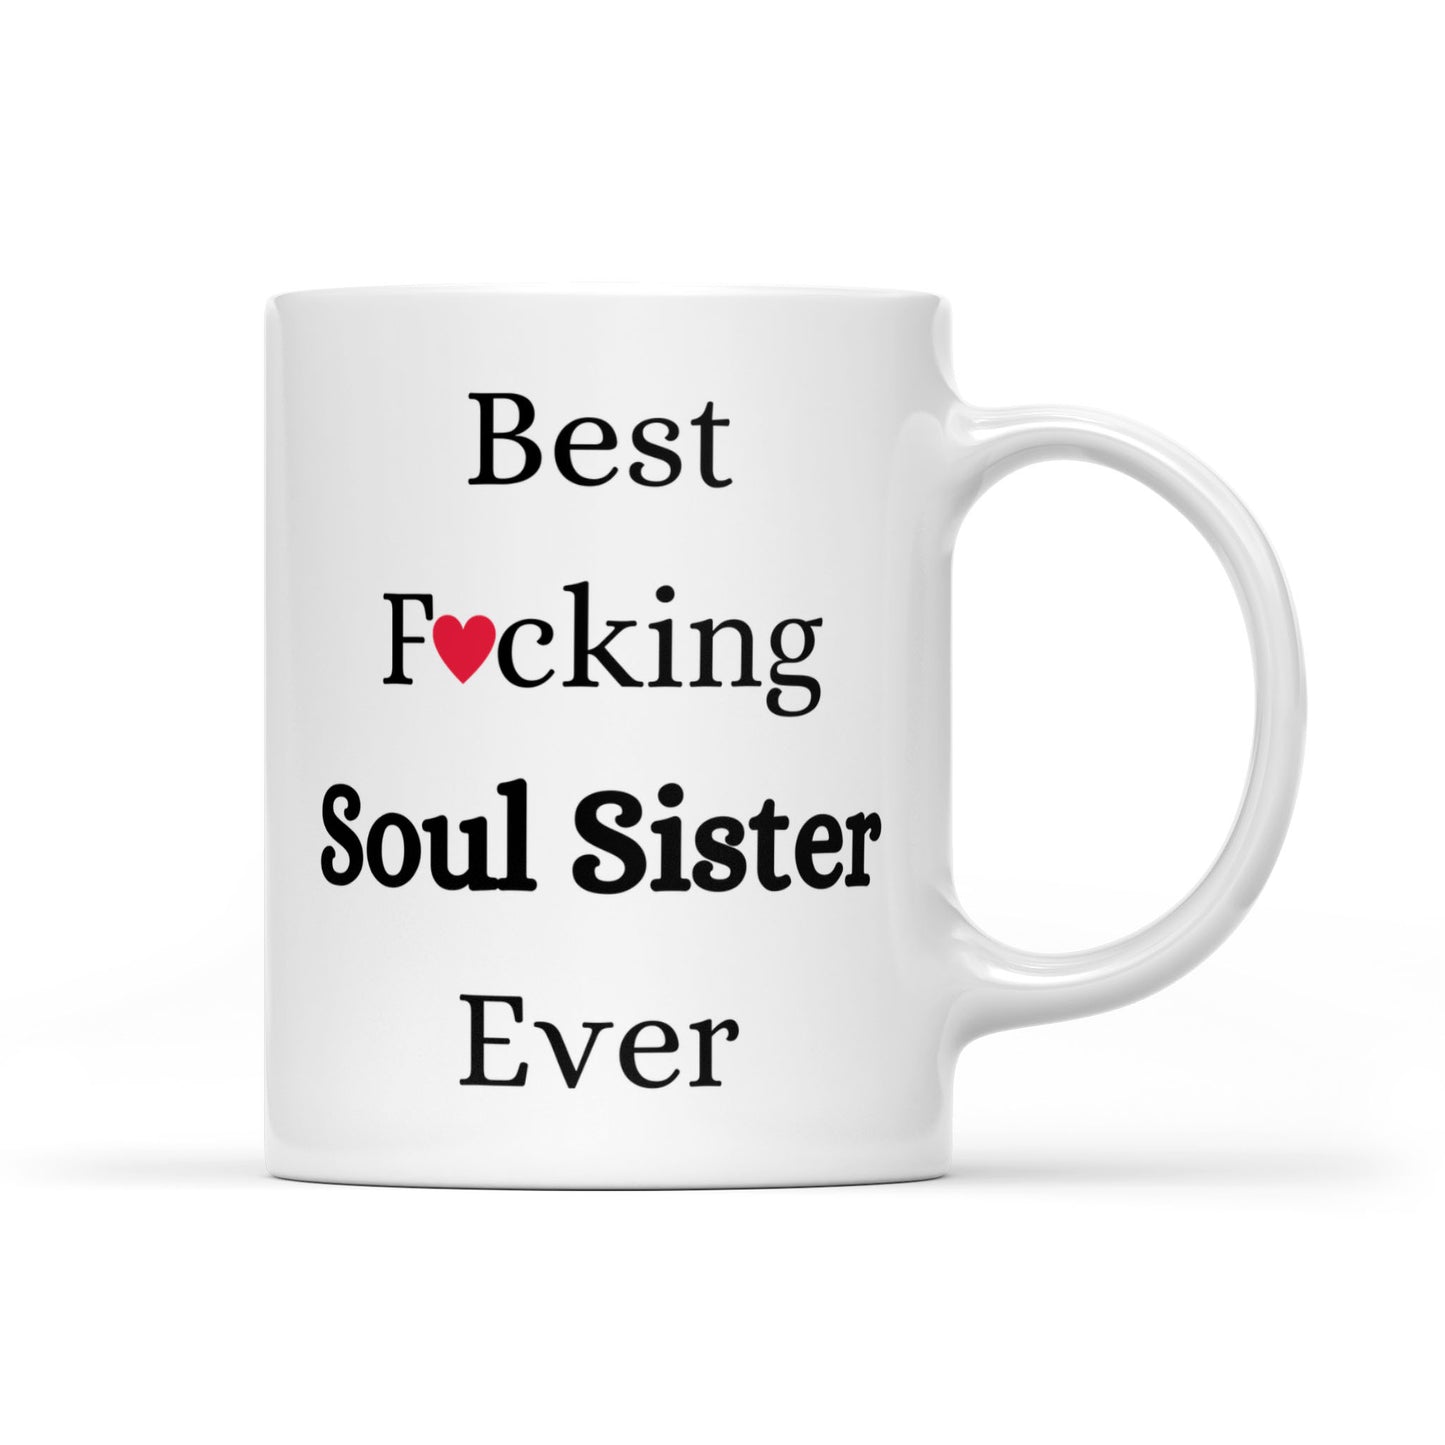 Soul Sister Ever Mug 11oz 